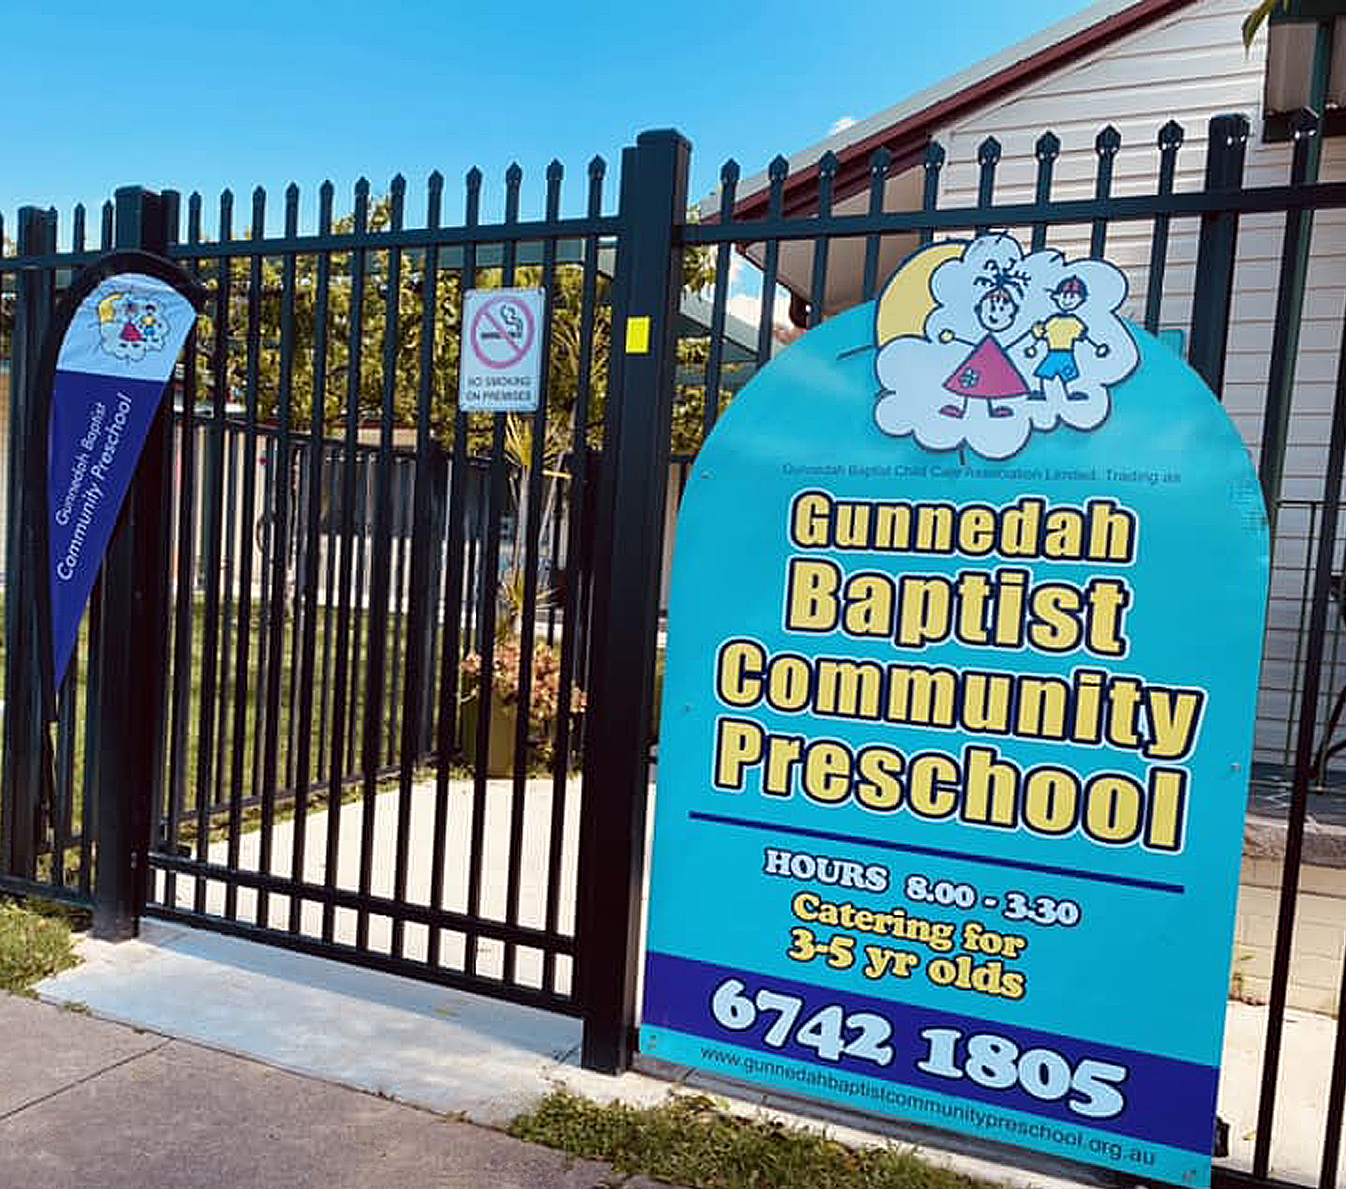 Gunnedah Baptist Community Preschool